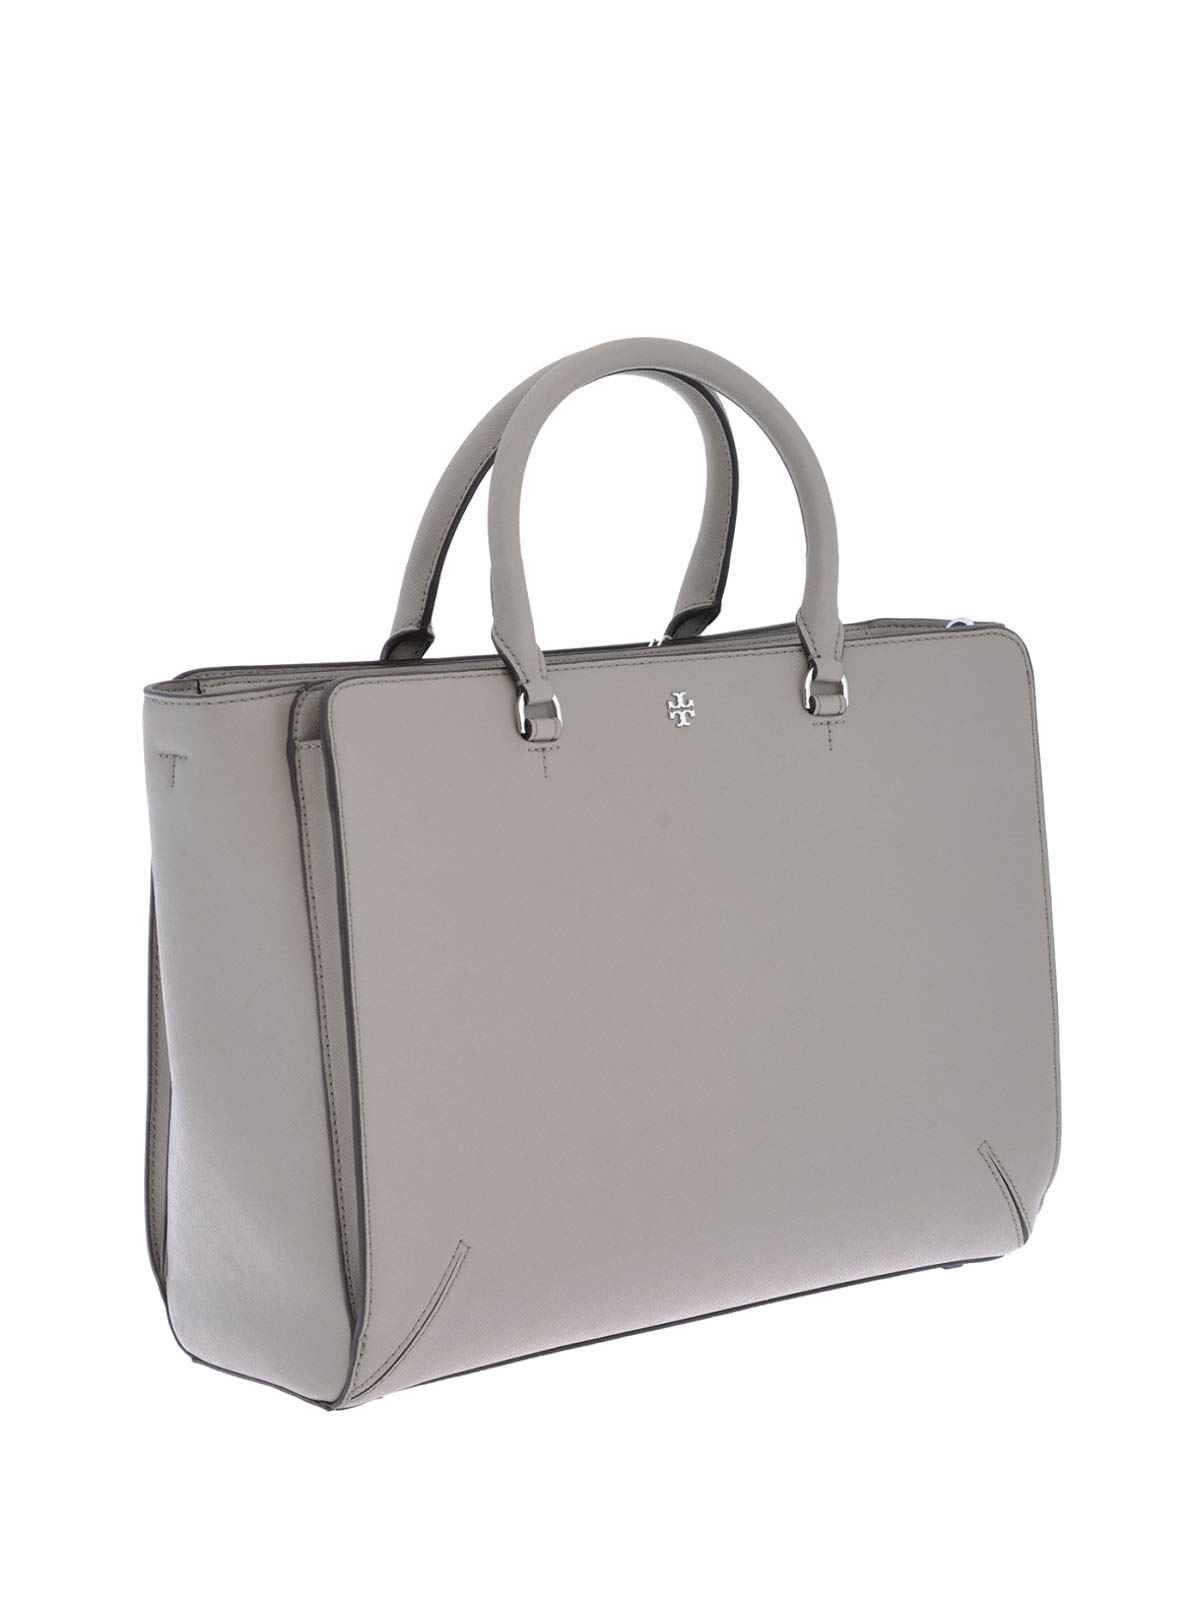 TORY BURCH: Robinson bag in saffiano leather - Grey